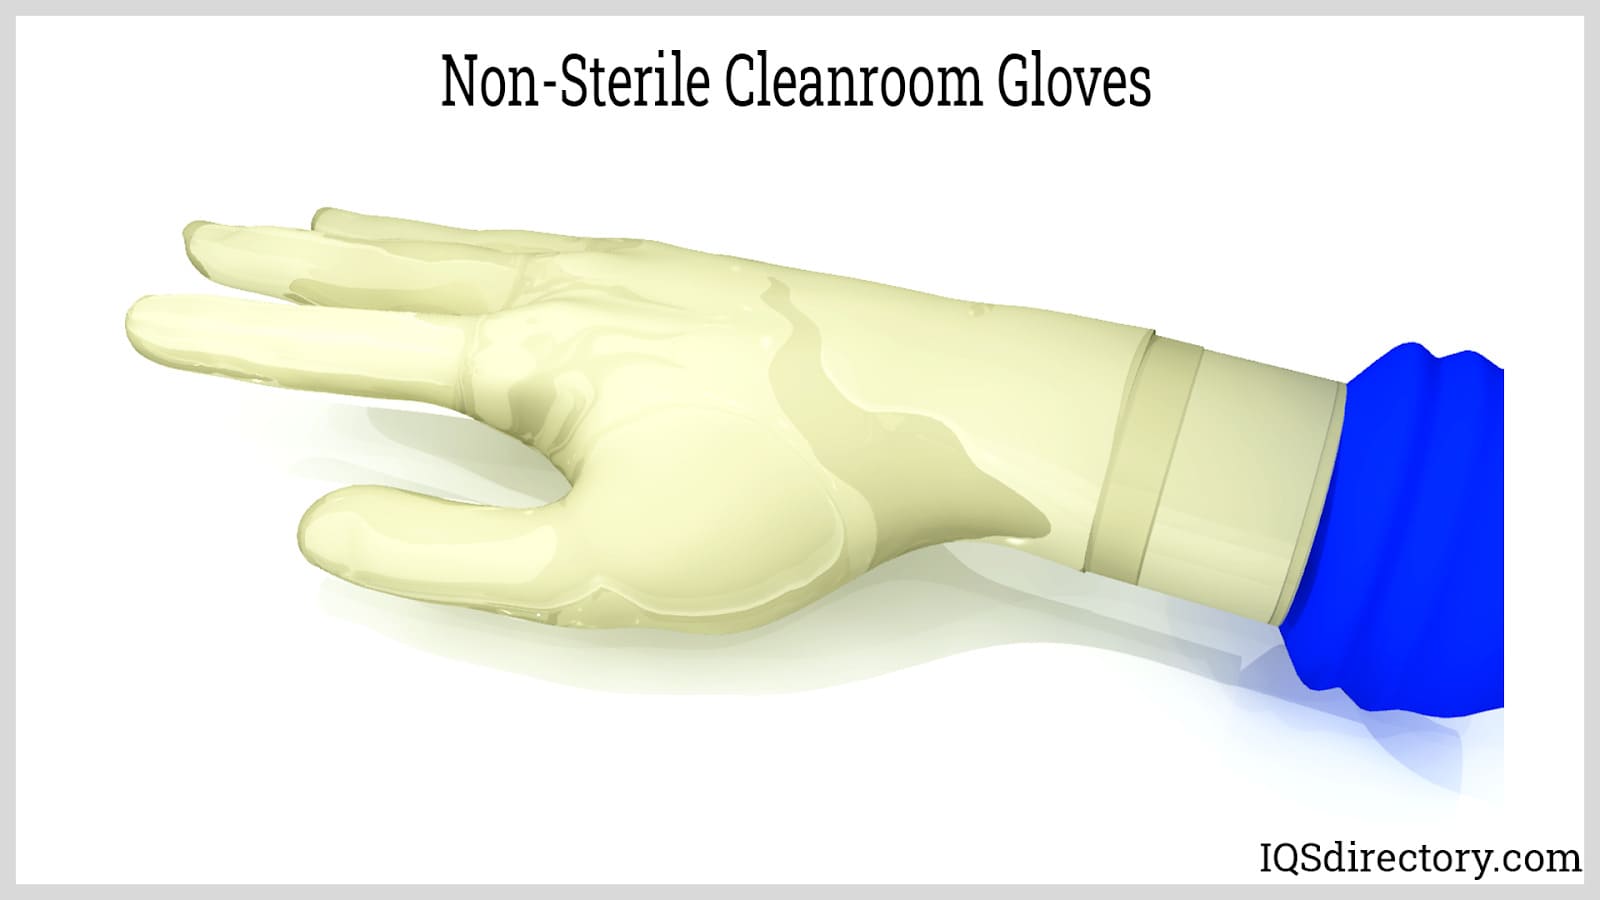 Non-Sterile Cleanroom Gloves